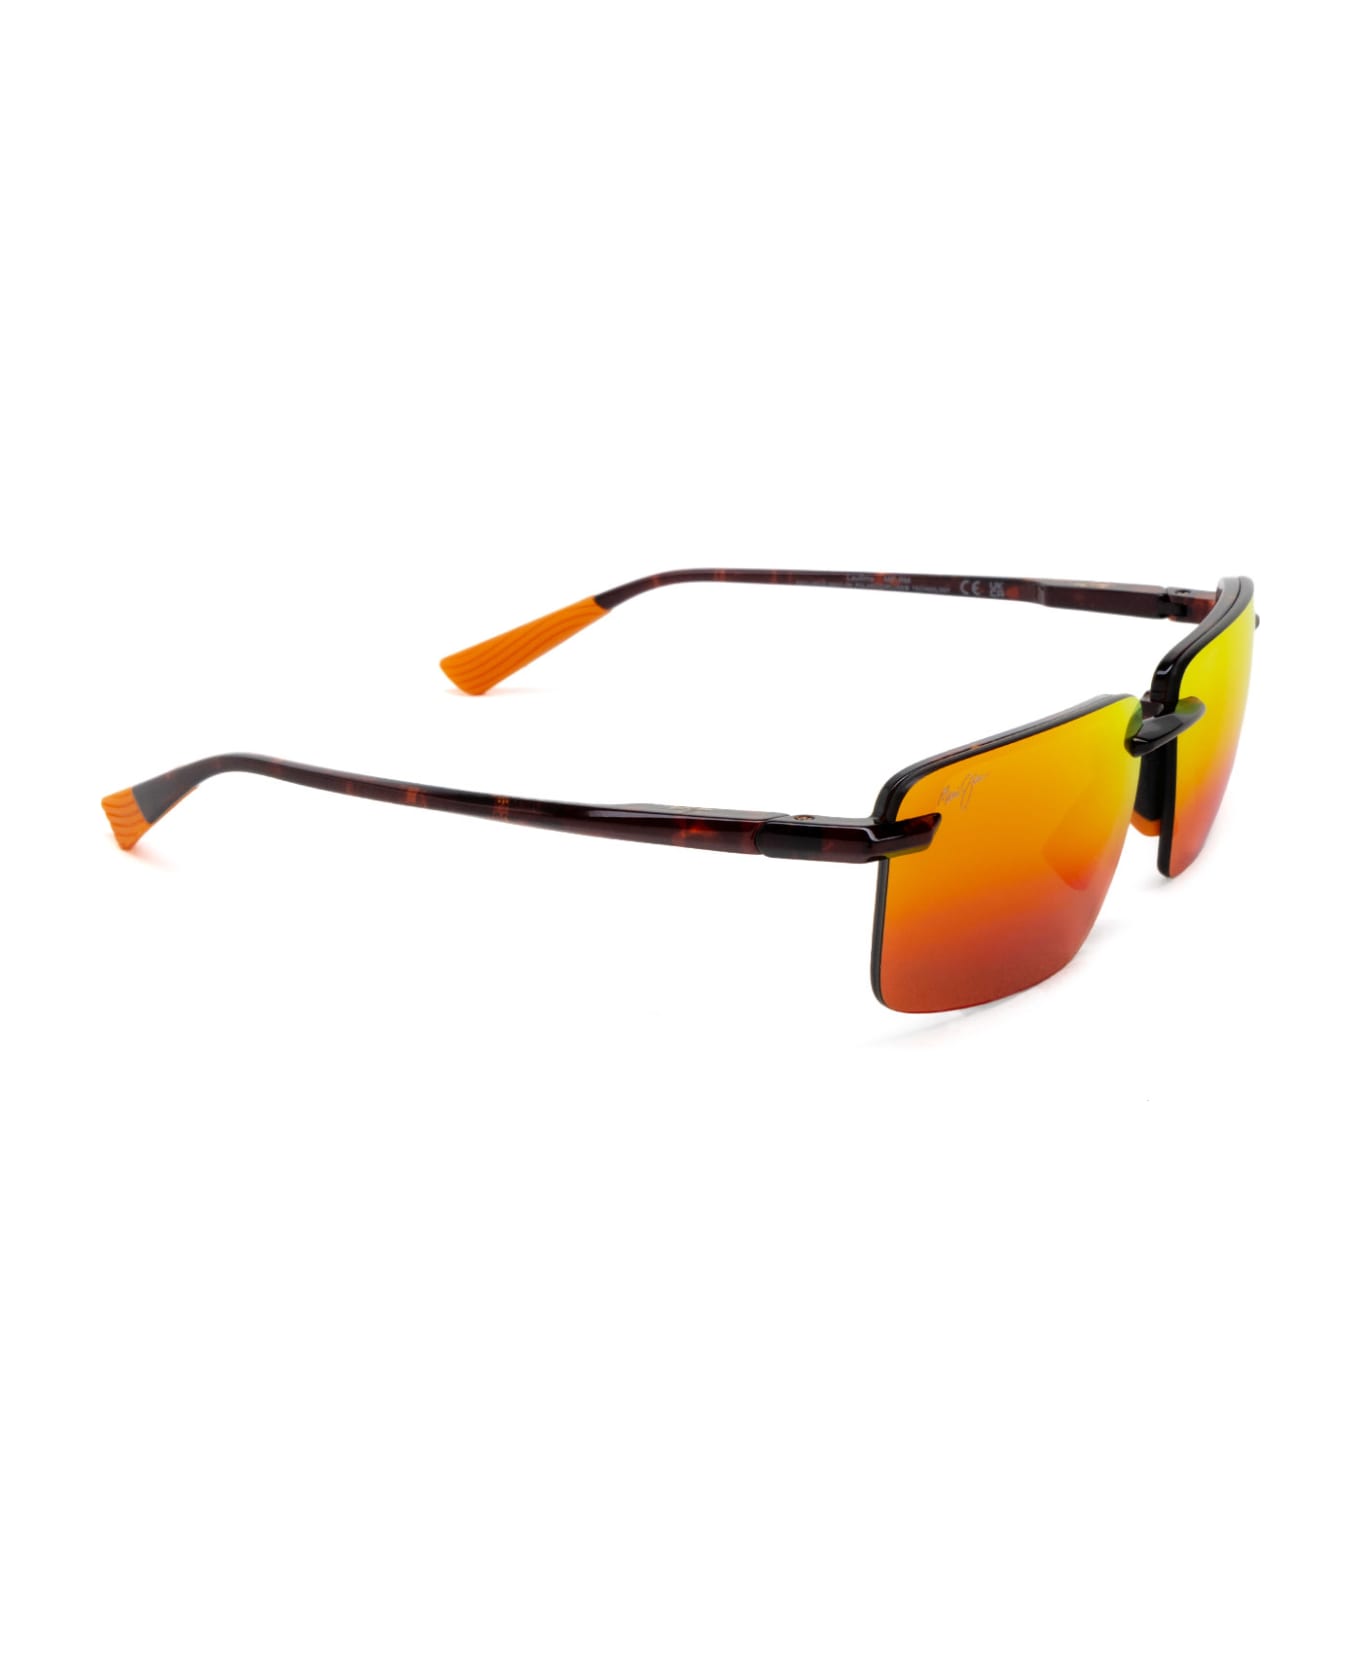 Maui Jim Mj626 Shiny Reddish Sunglasses - Shiny Reddish